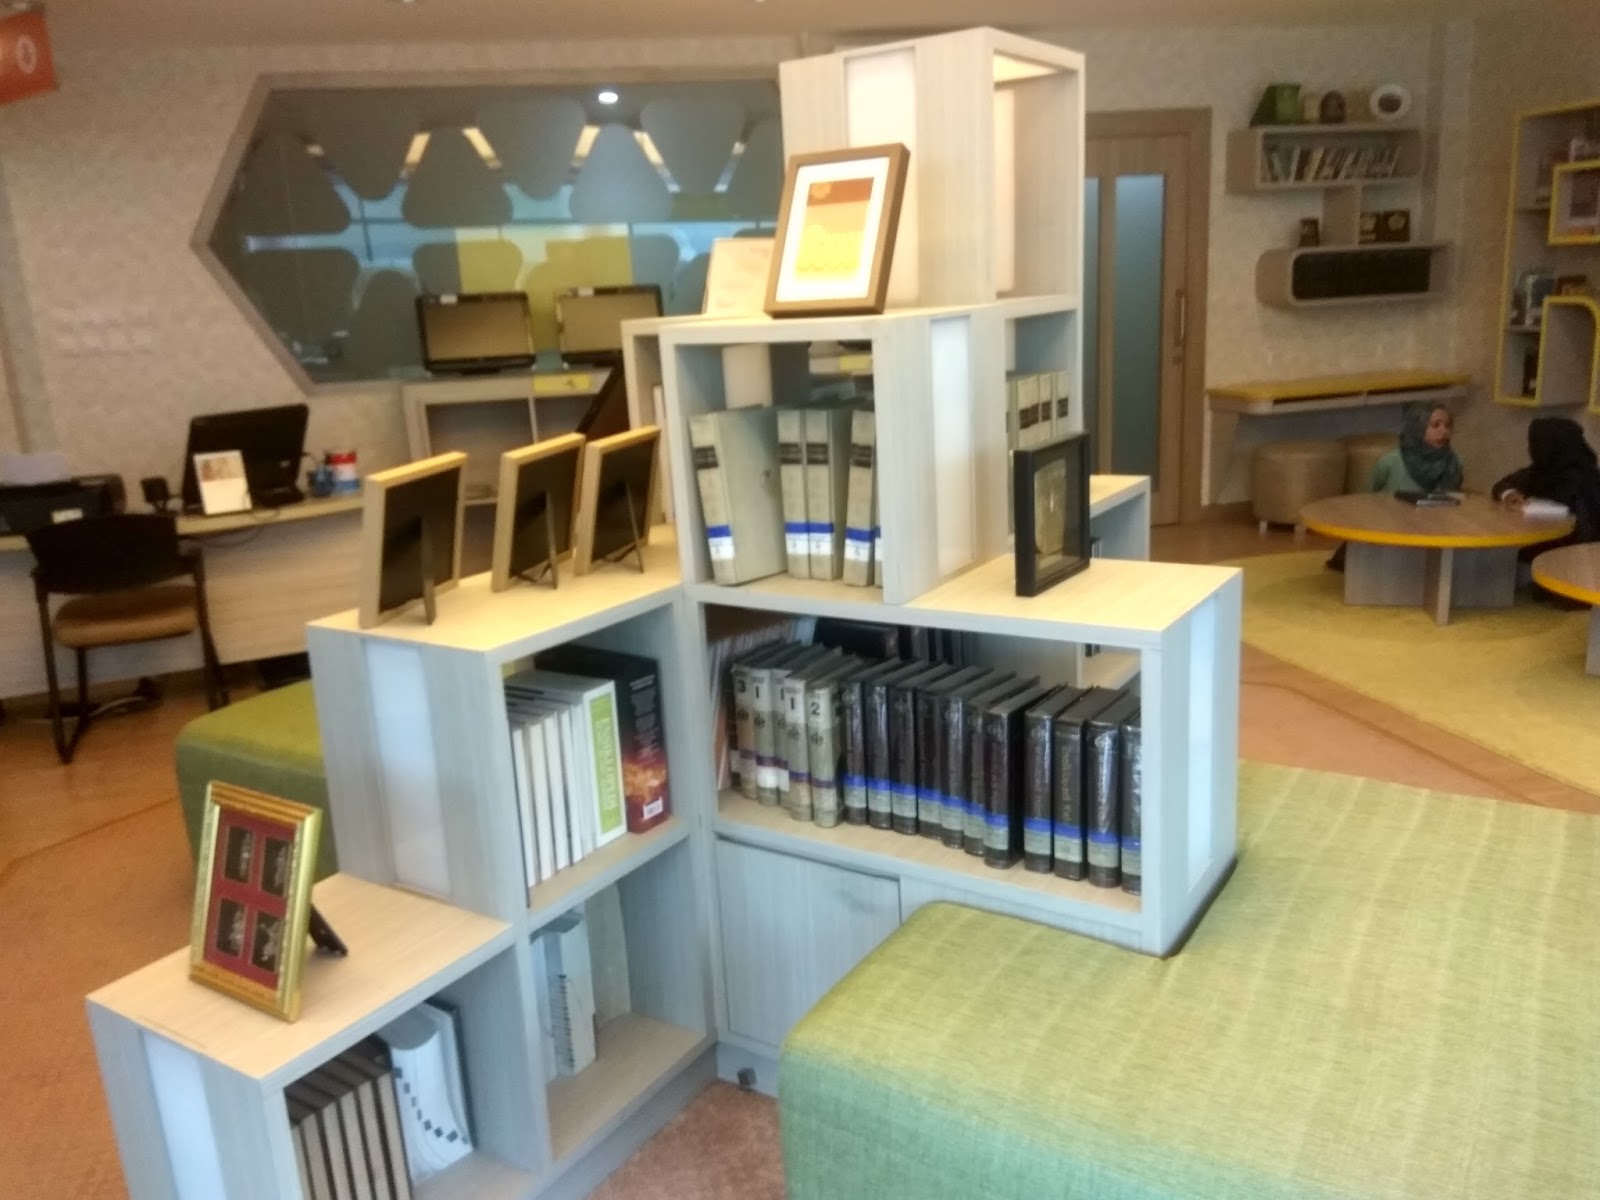  Desain  Perpustakaan  Sekolah  Minimalis  Nusagates